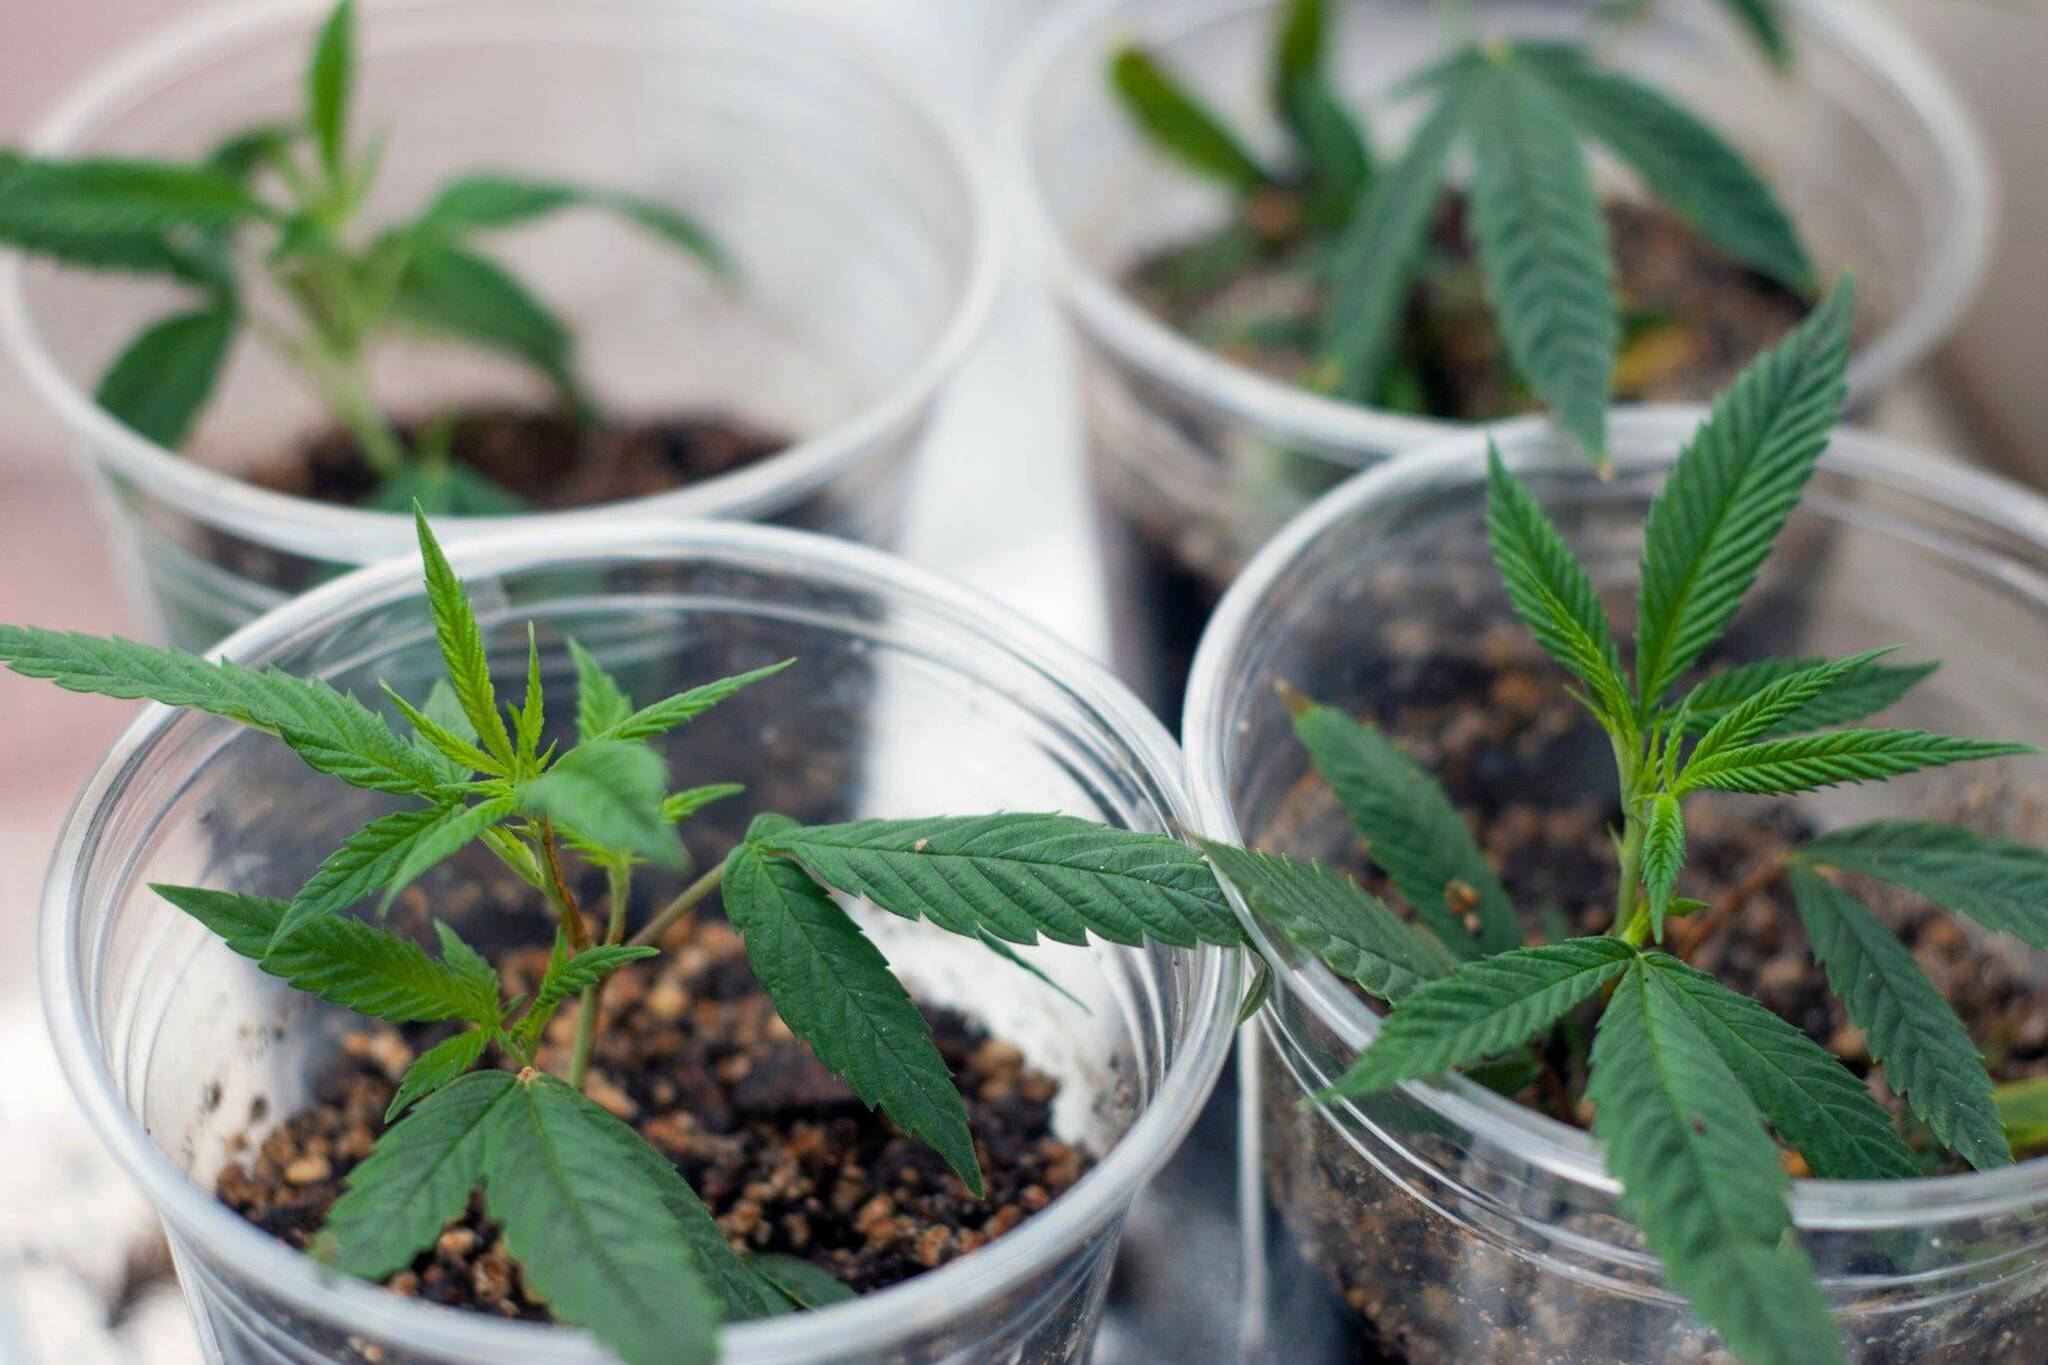 How To Grow Marijuana From Seed - Dummies